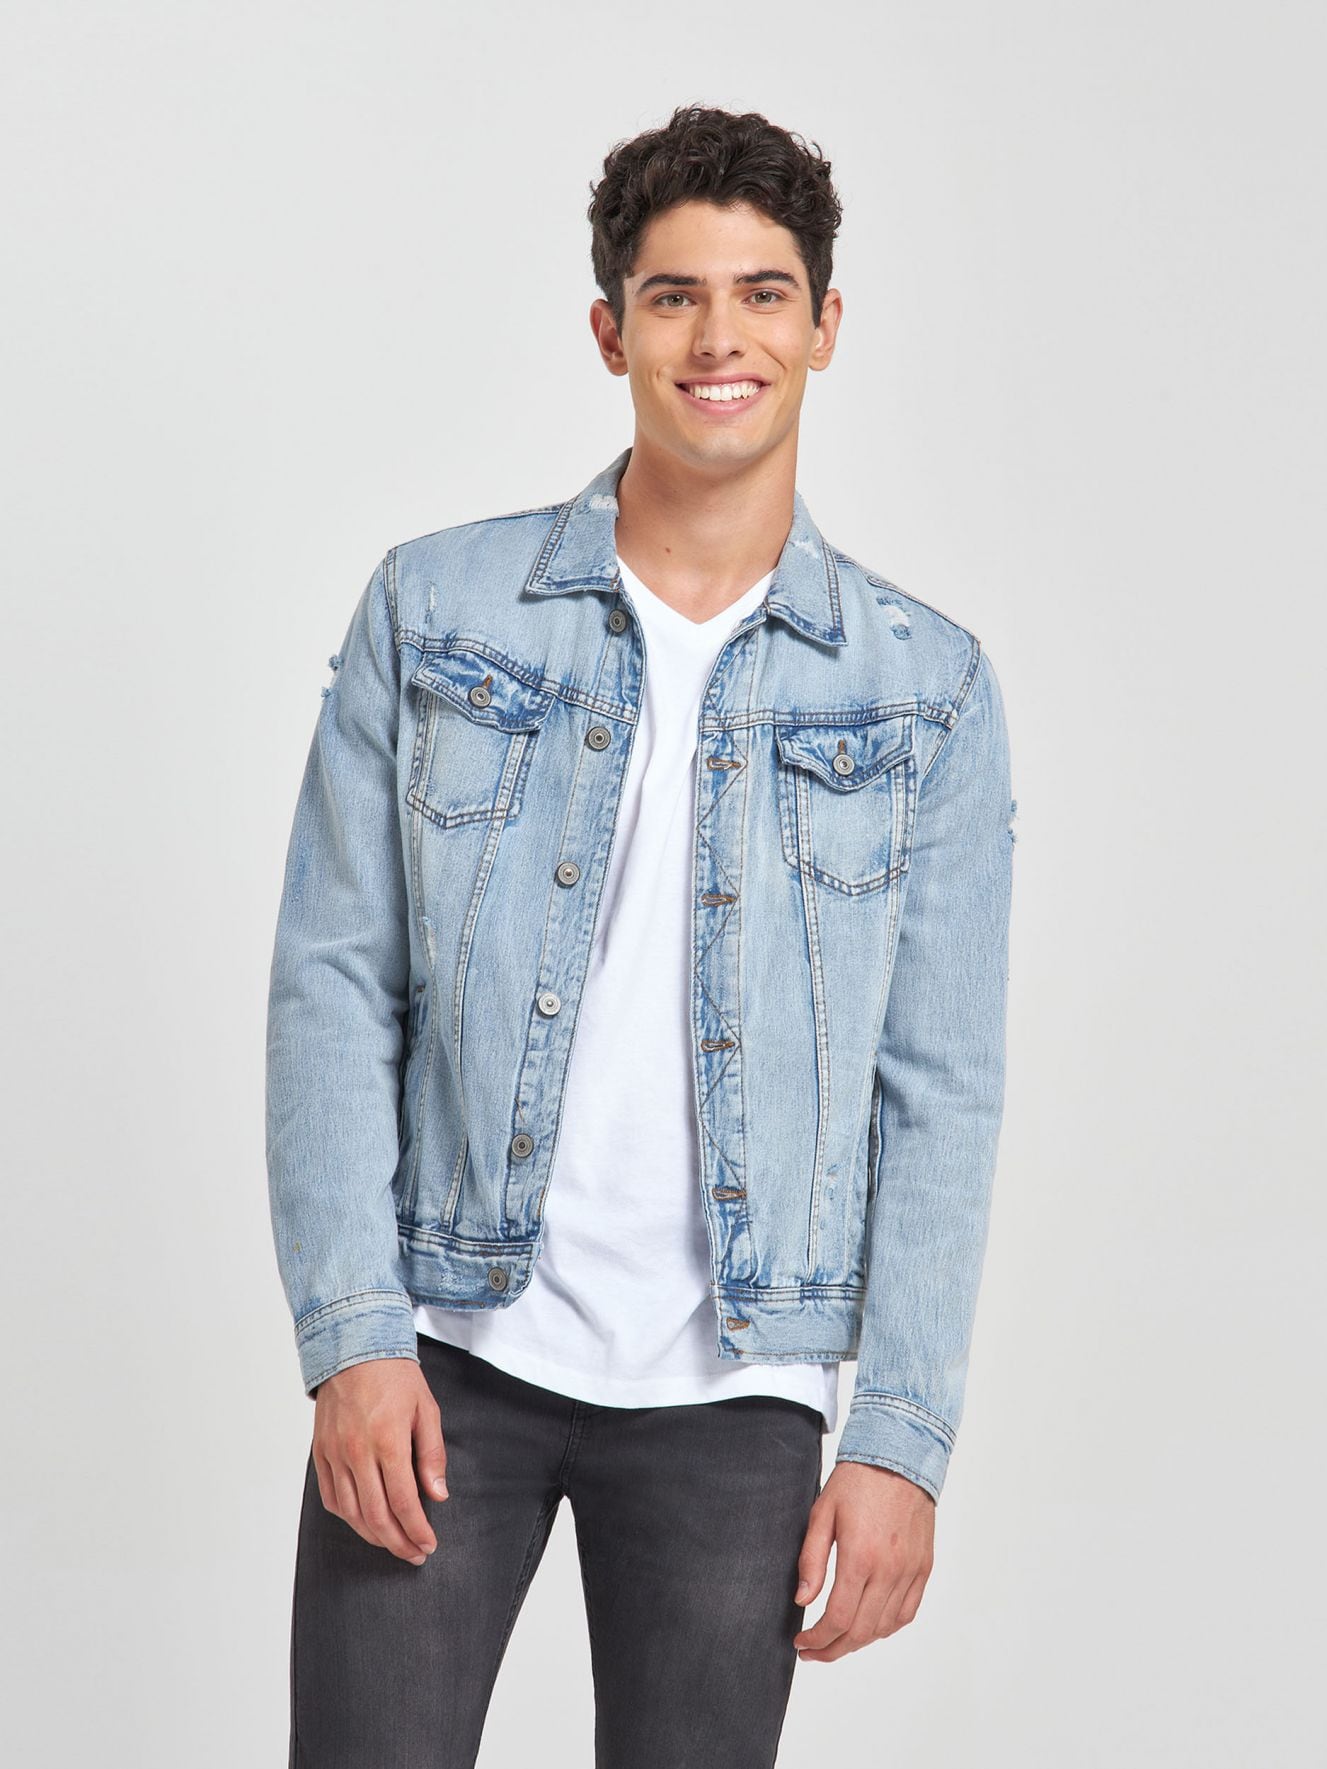 light colored jean jacket